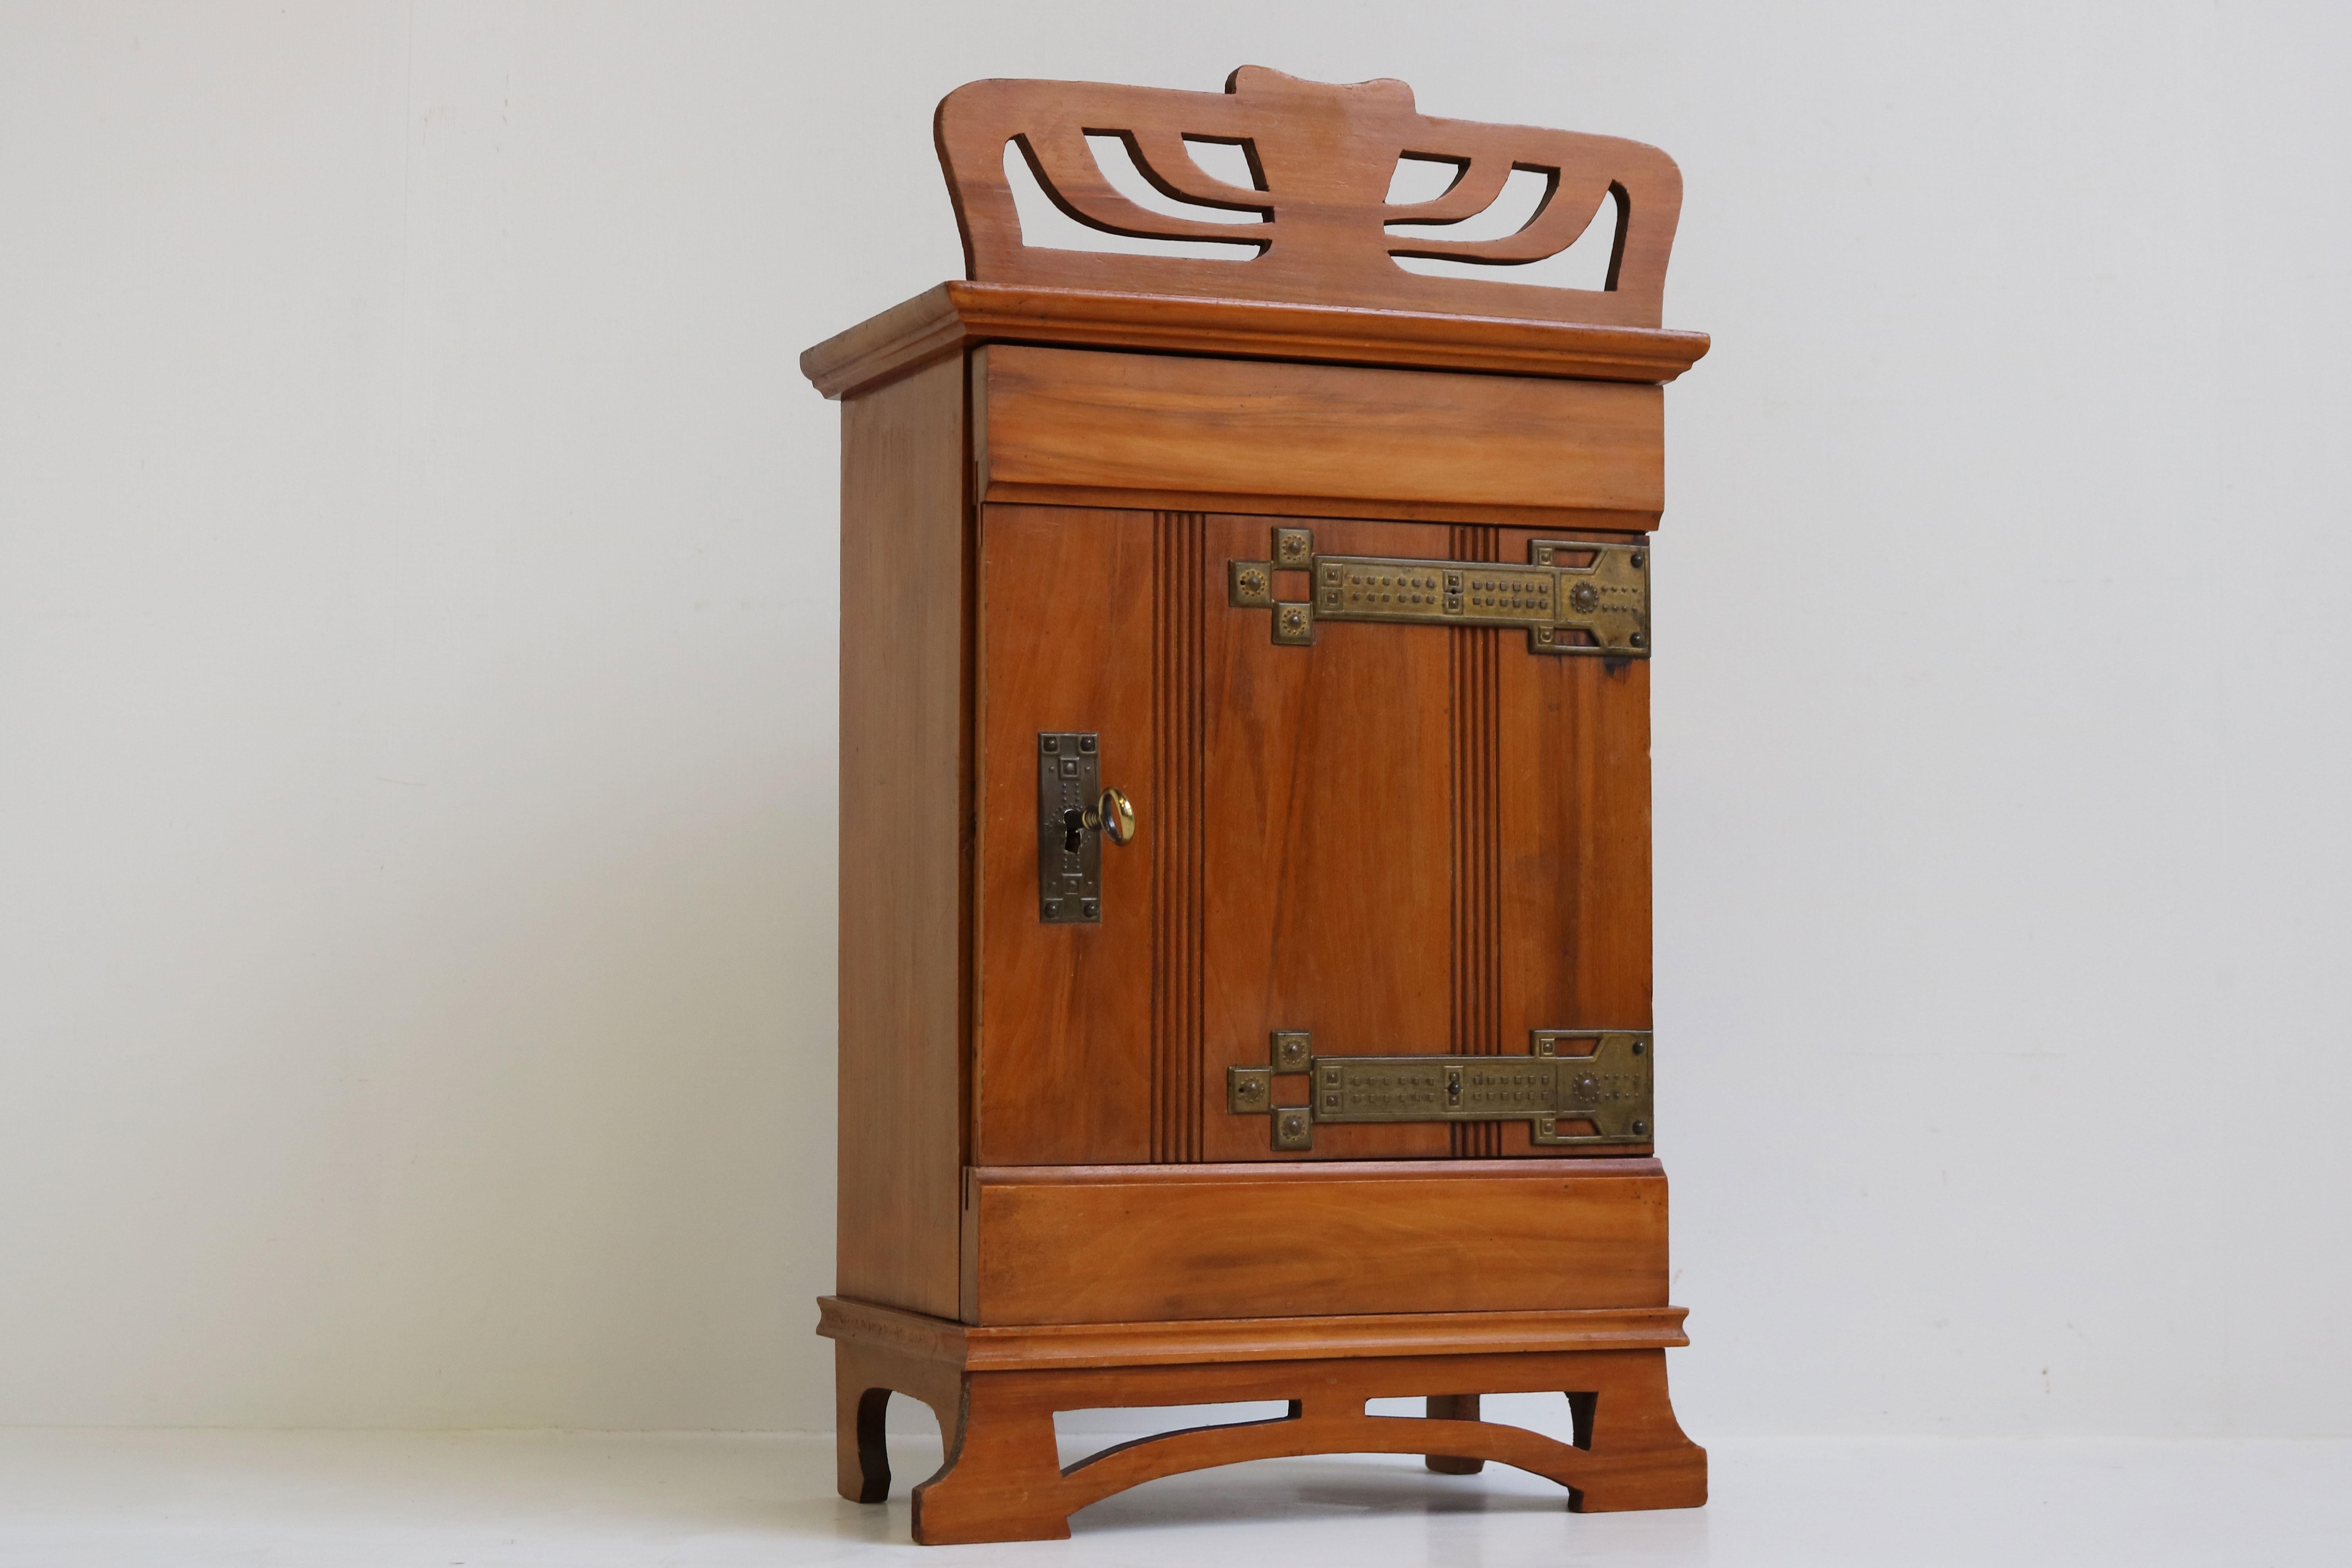 Dutch Antique 1910 Art Nouveau / Jugendstil Wall Cabinet in Cherry Wood Brass For Sale 1